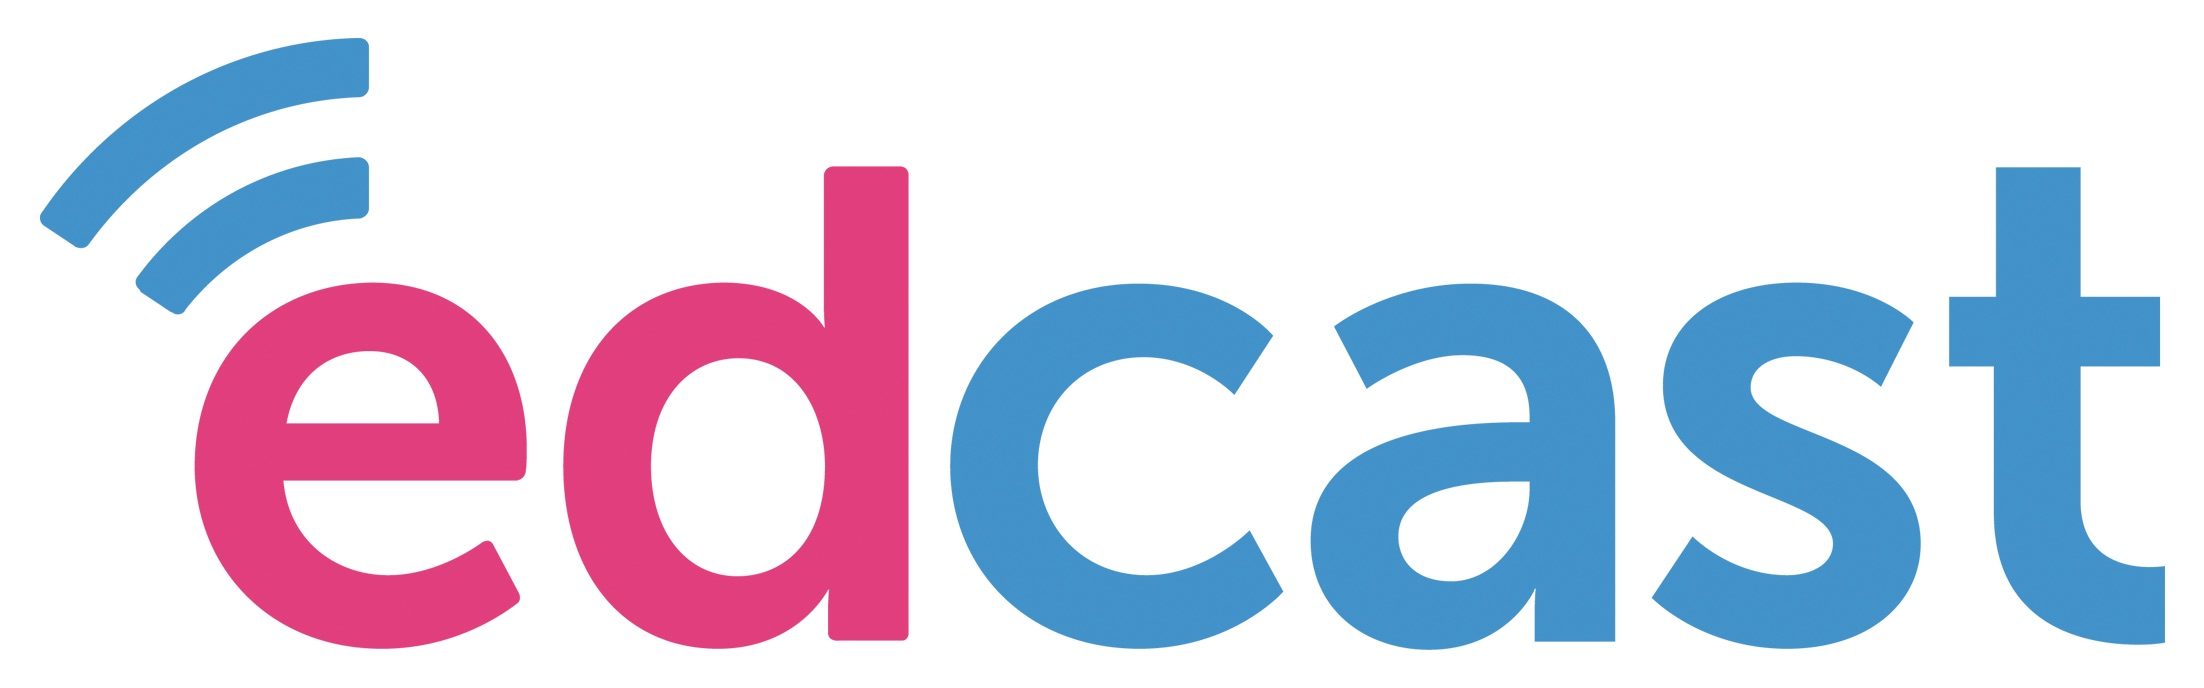 edcast_logo